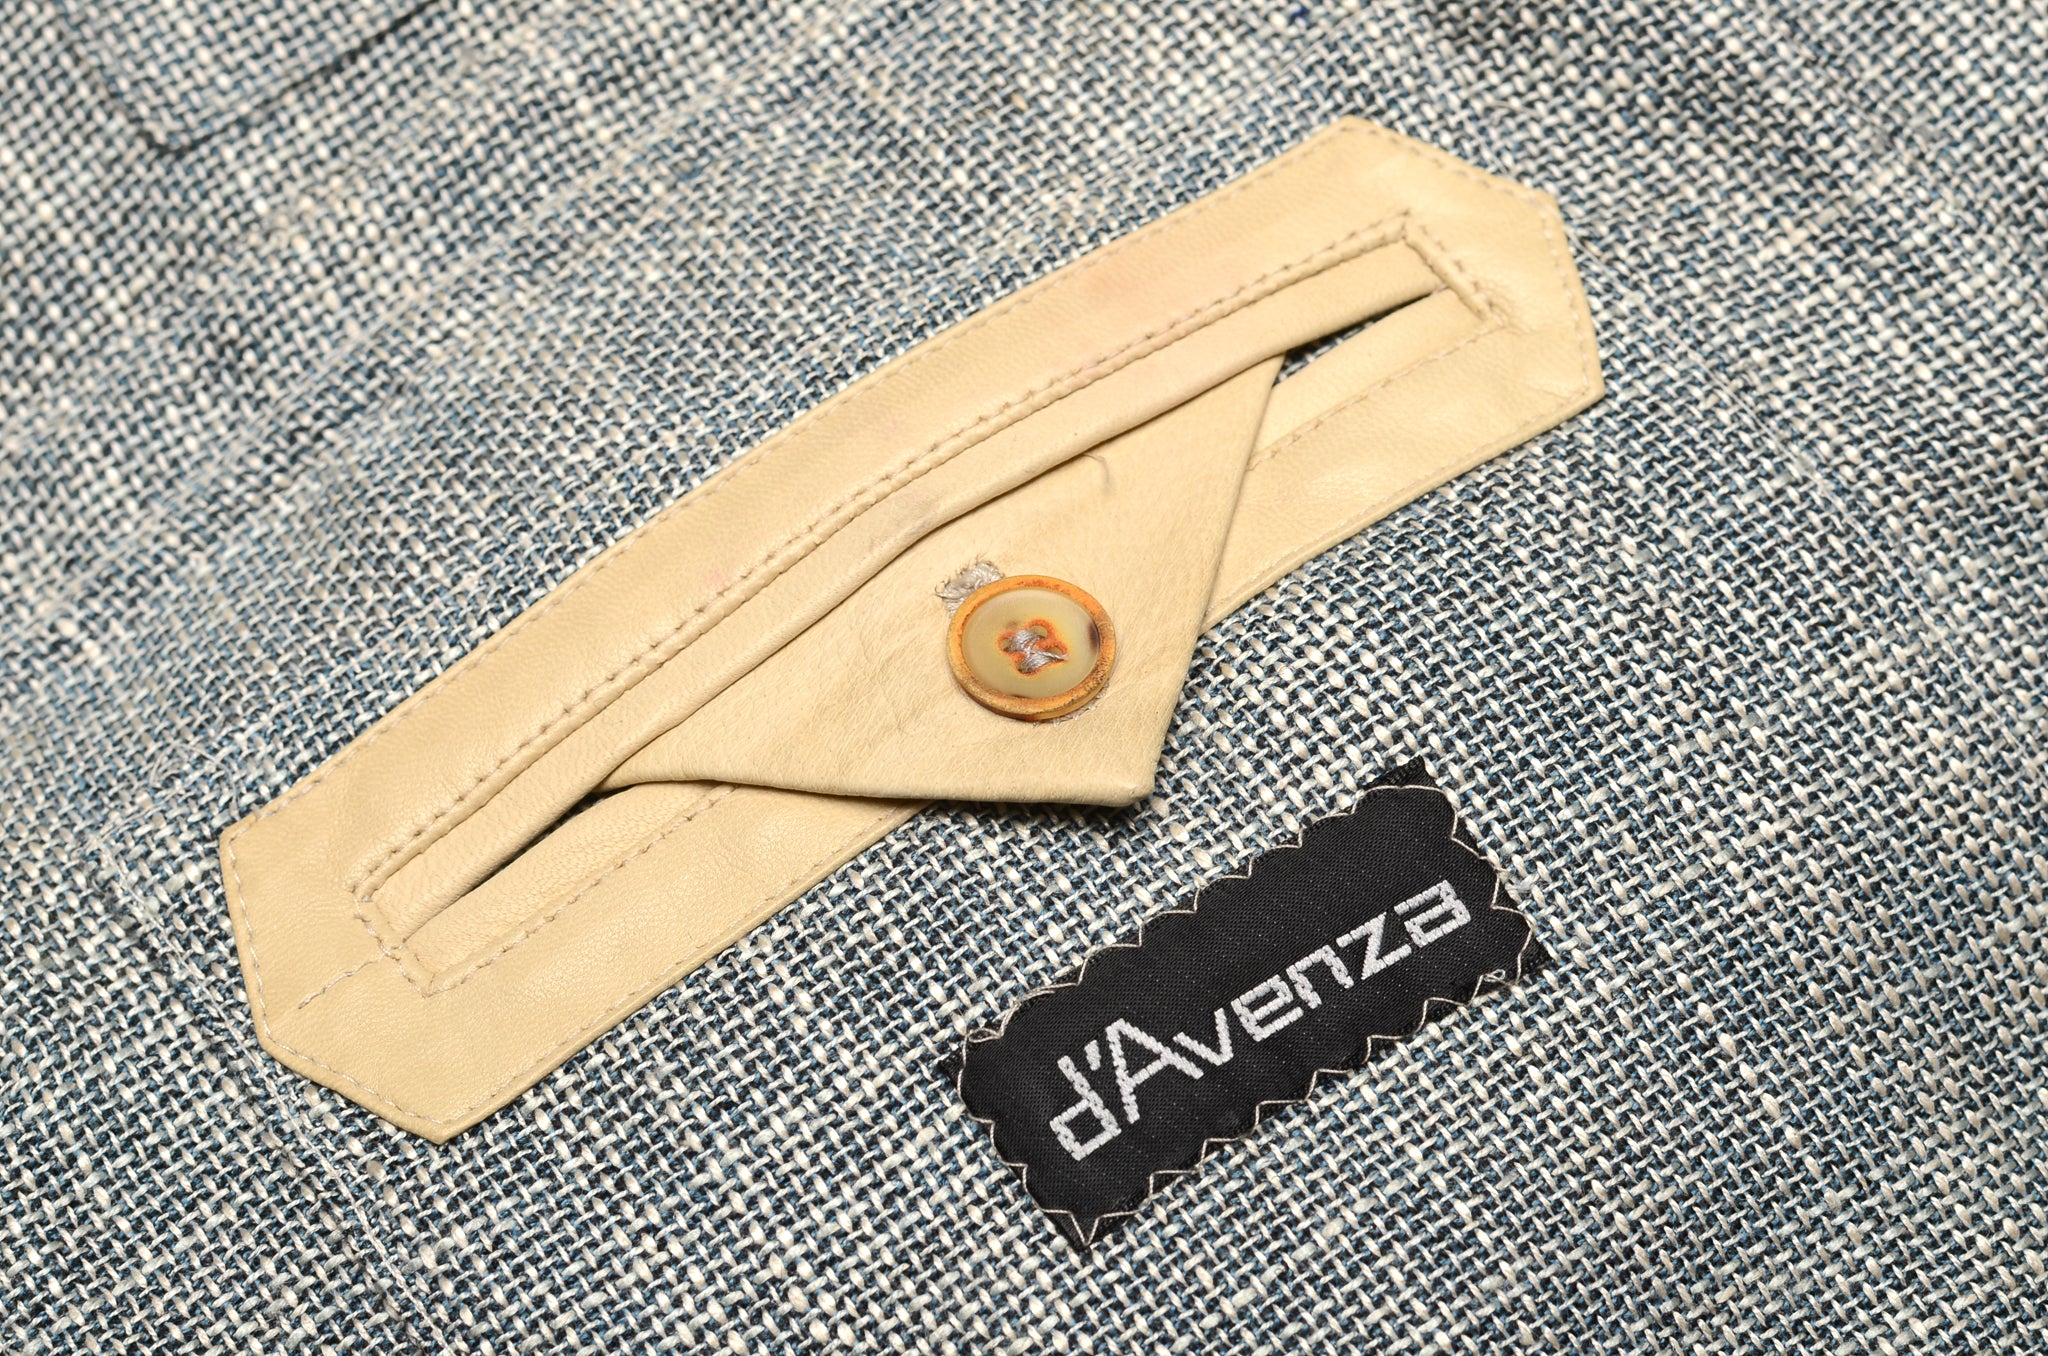 D'AVENZA "BANDERAS" Gray Wool Silk Linen Field Jacket Leather Trims EU 50 NEW US 40